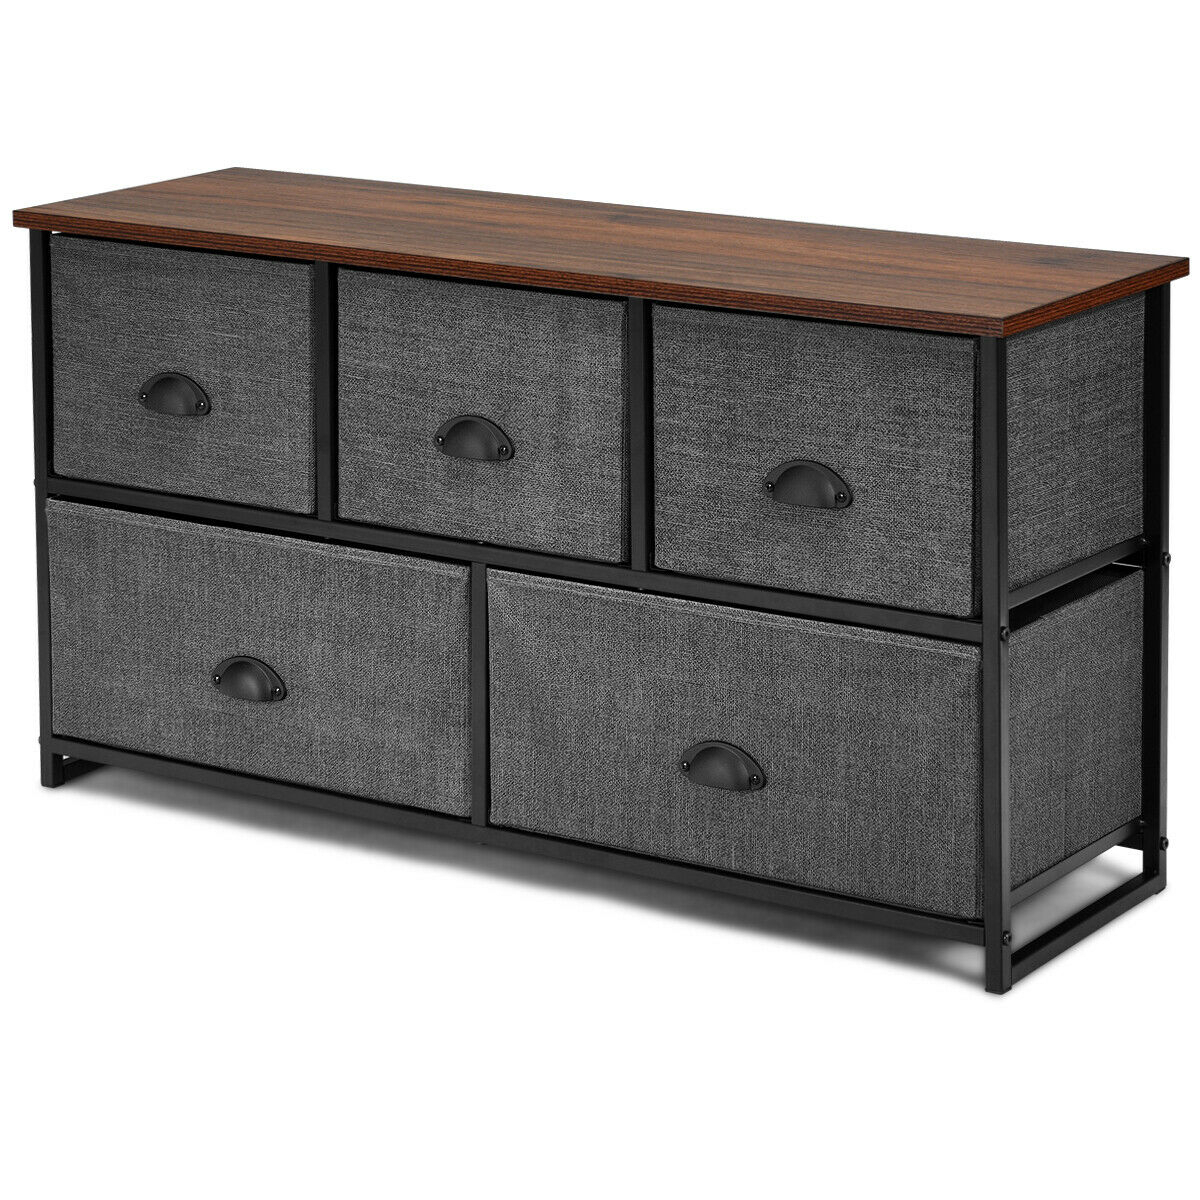 5 Drawers Dresser Storage Unit Side Table Display Organizer Dorm Room Wood Black